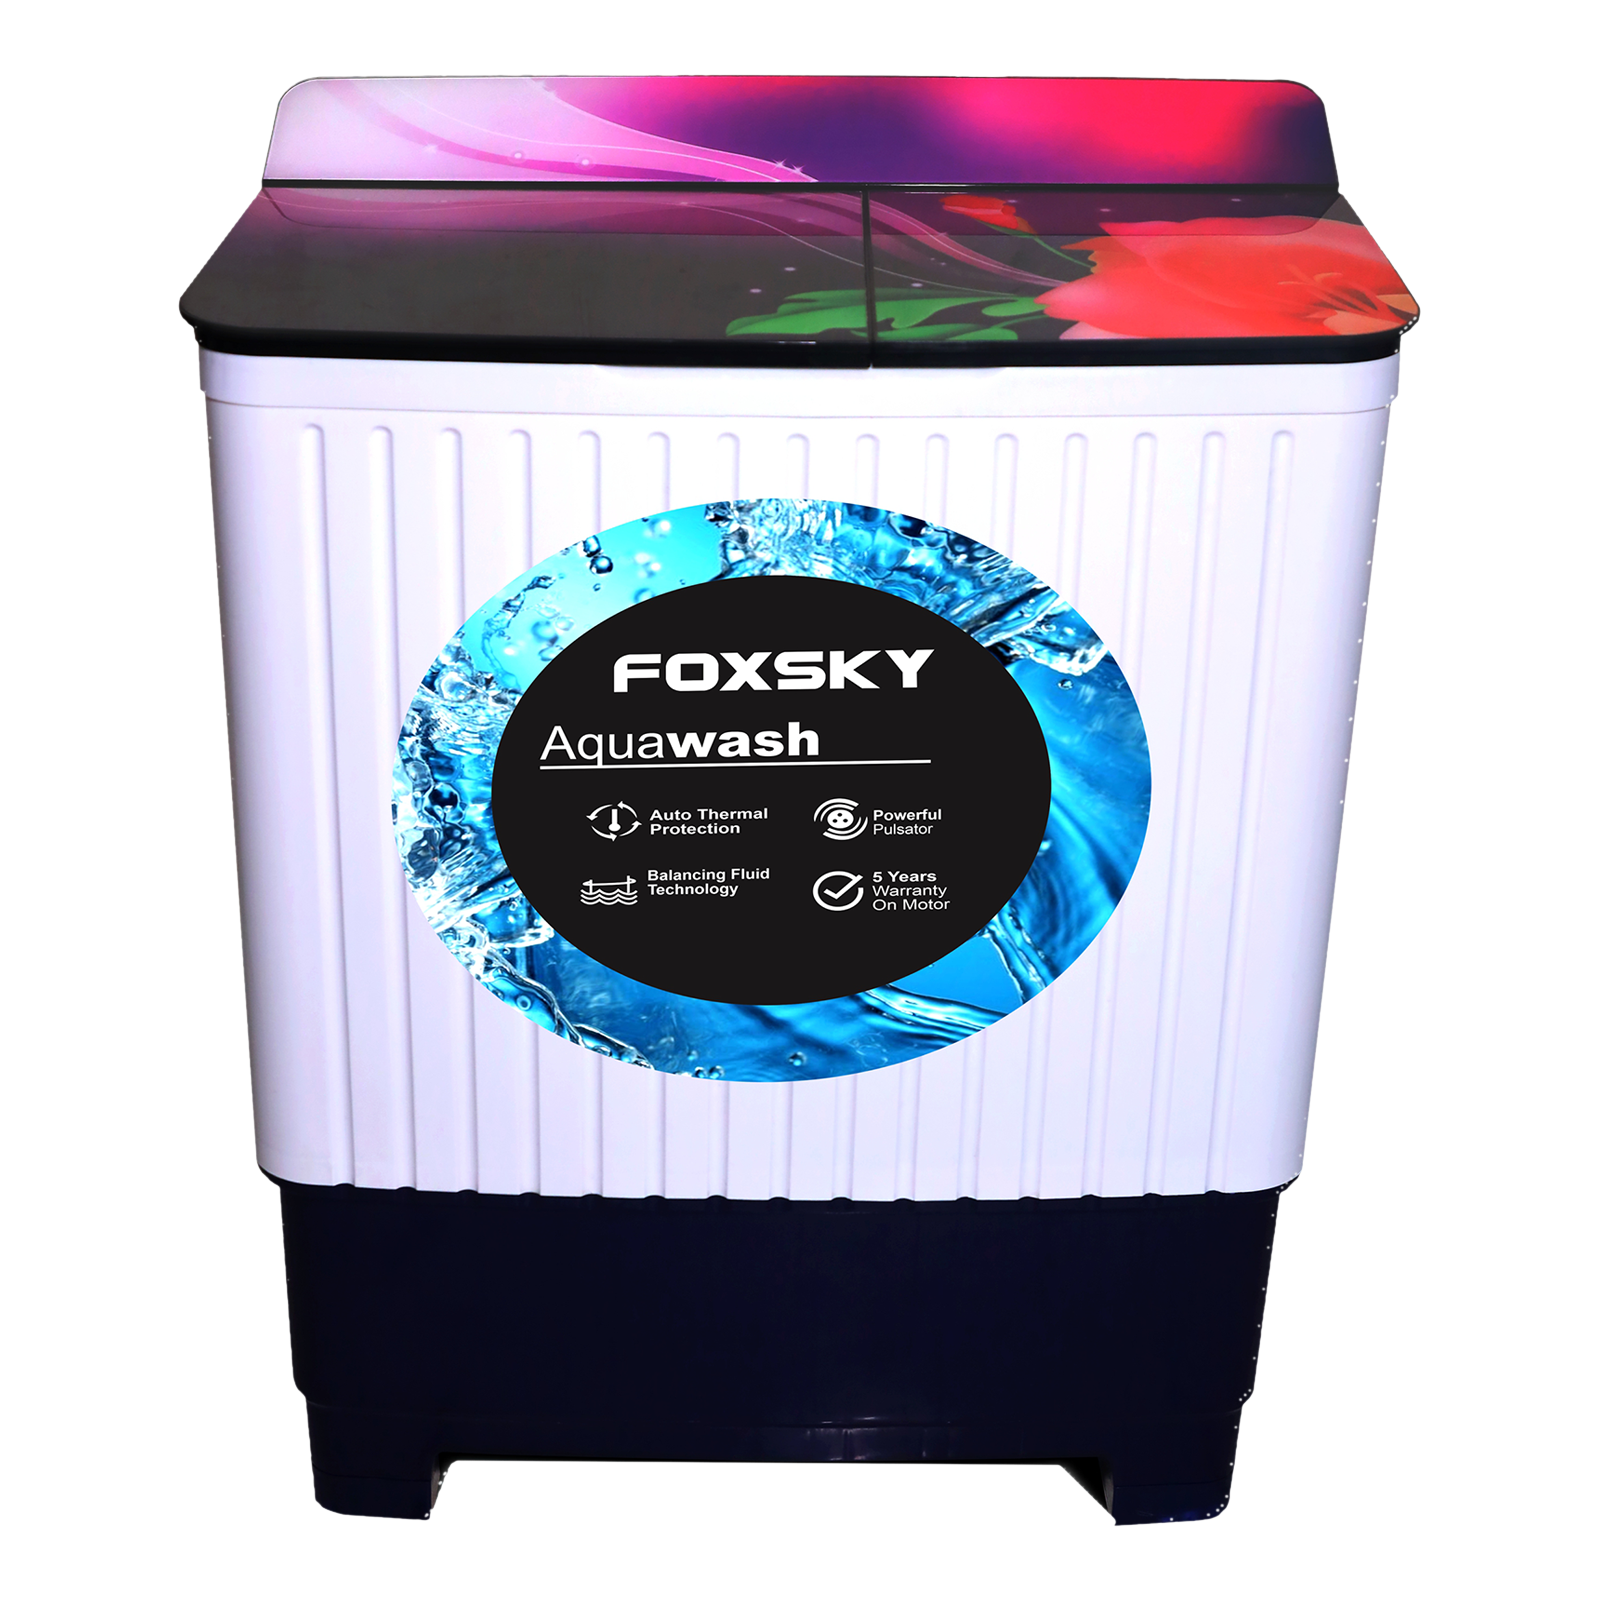 FOXSKY 8 kg Semi-Automatic Top Load Washing Machine with Magic Filter (Aqua Wash, Maroon)